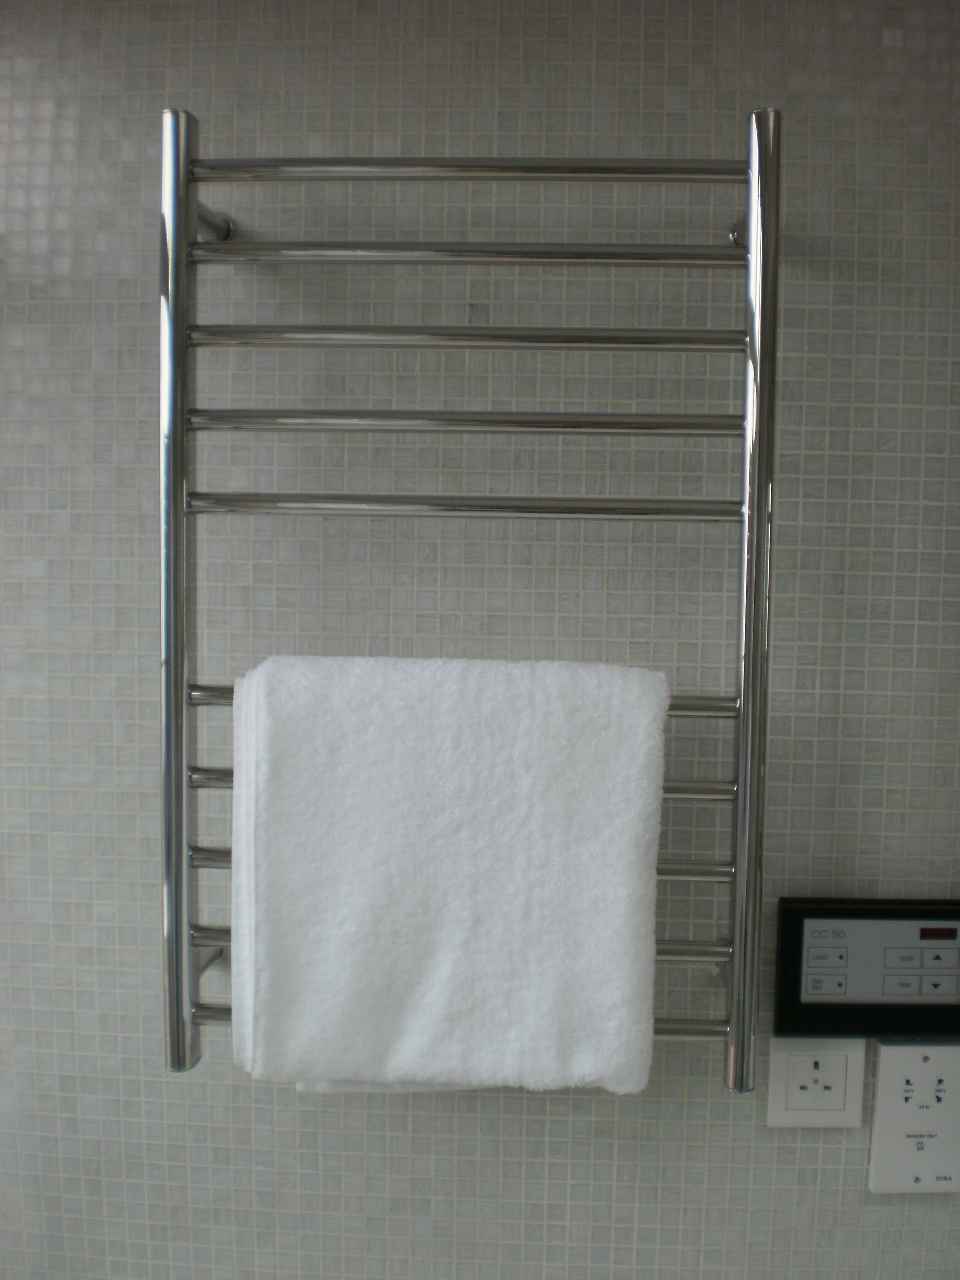 heated towel rails, electric towel rail, towel rack, towel warmerAqxy[Aqy[Aq[Aqx[Ay